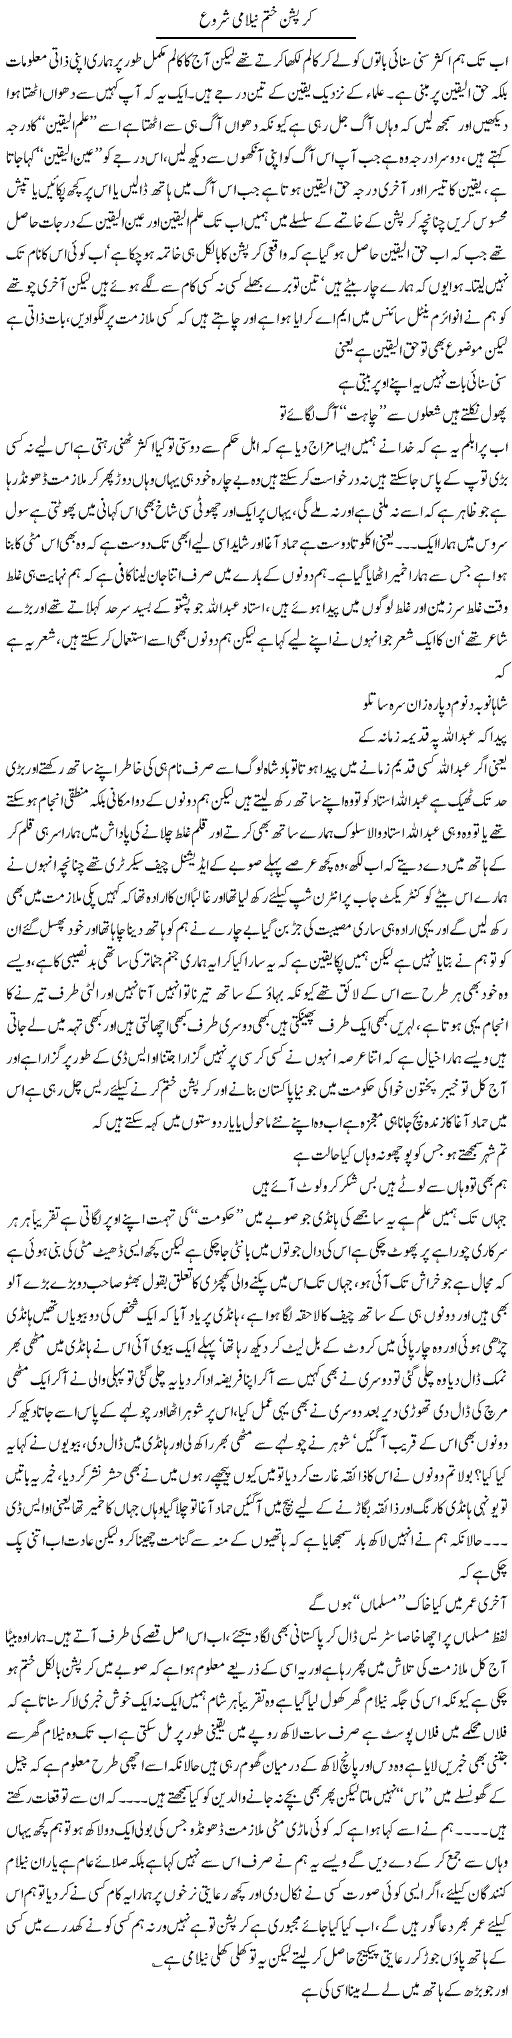 Corruption Khatam Nilami Shuru | Saad Ullah Jan Barq | Daily Urdu Columns